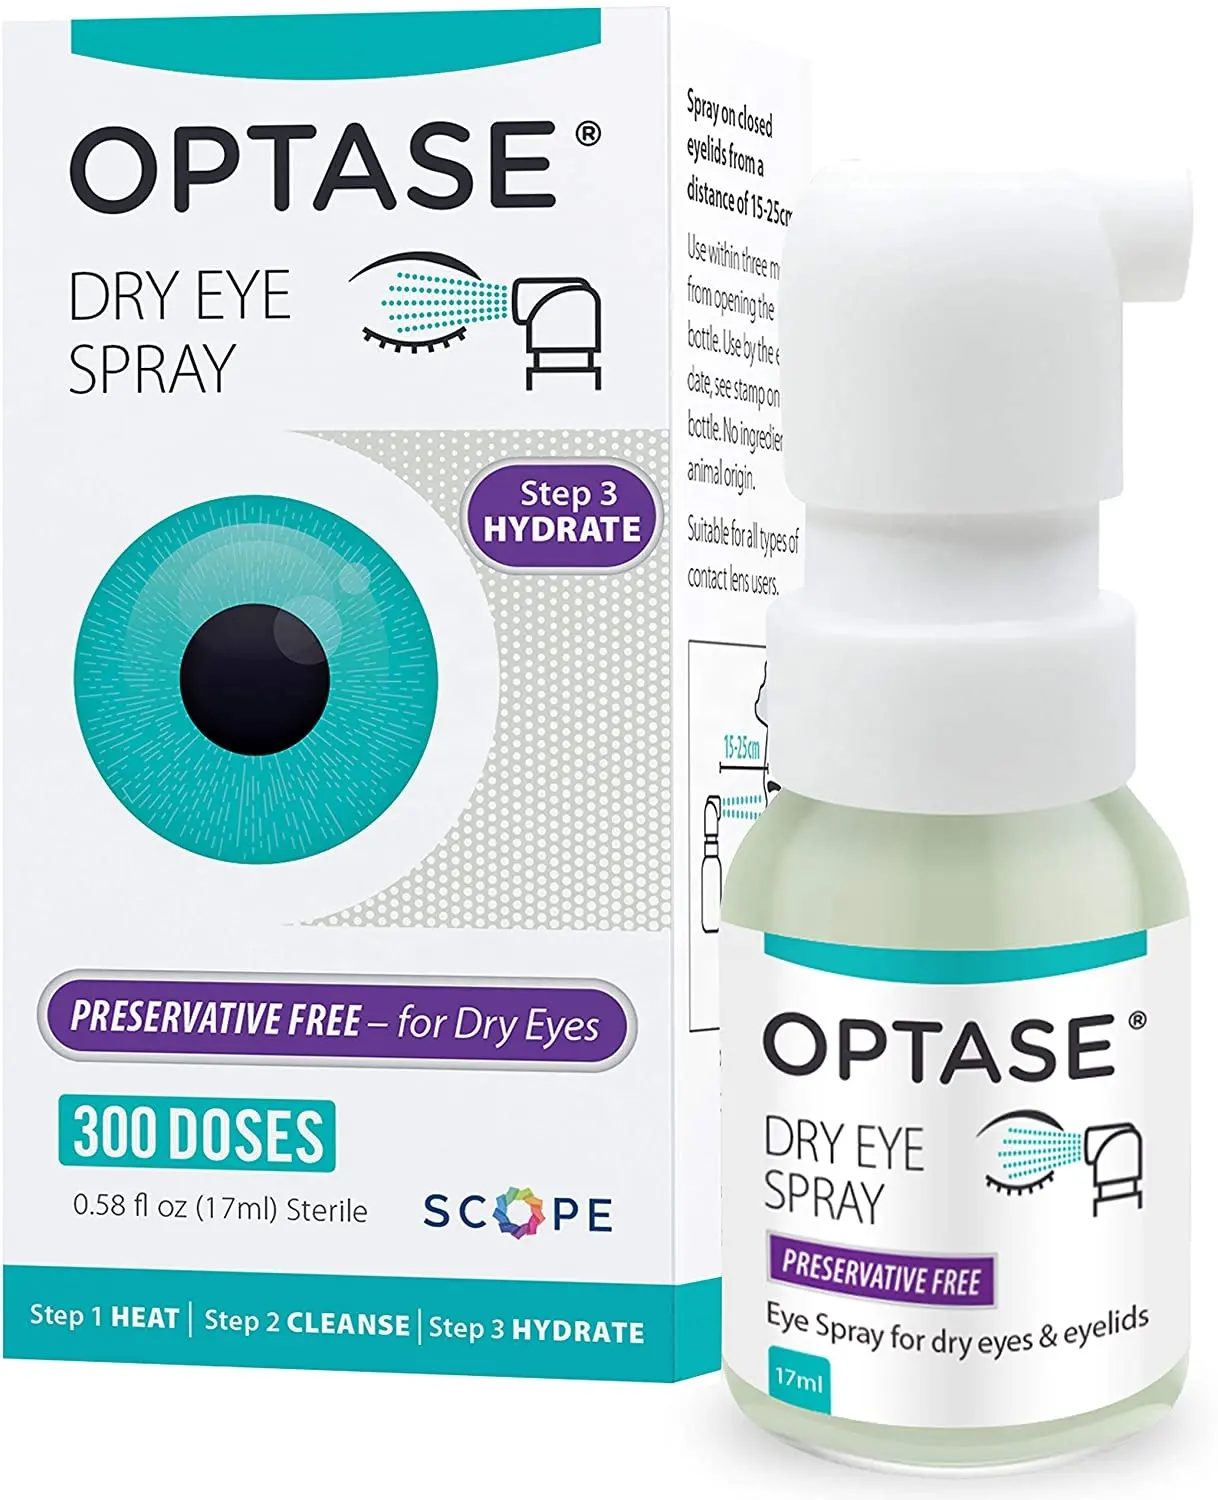 Optase Dry Eye Spray Preservative Free -17ml Redness And Irritation Relief, Eye Moisturizing Spray